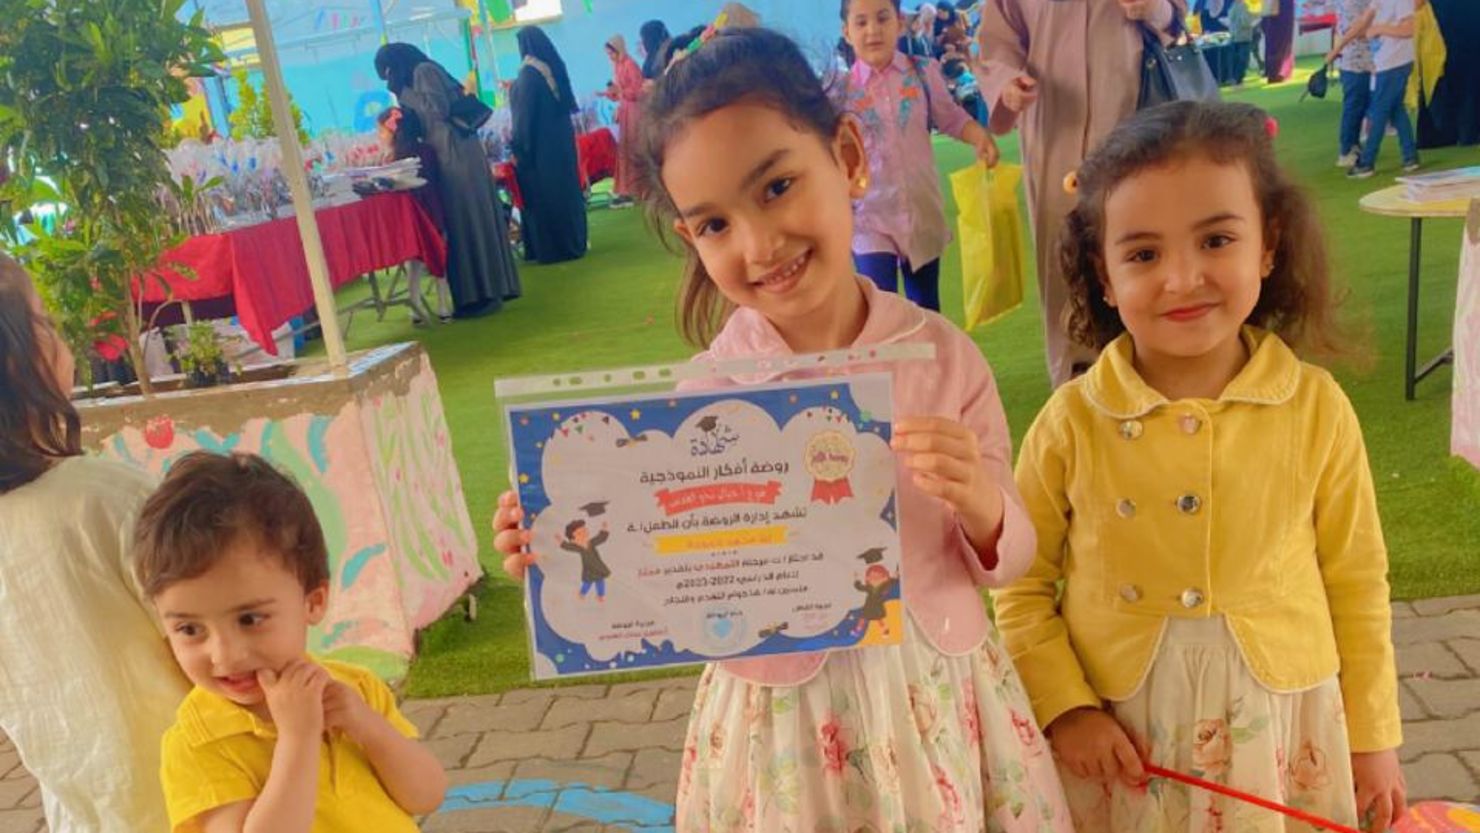 The Hamouda siblings, Kareem, aged 2 (left), Ella, aged 6 (center) and Sila aged 4, at a pre-school graduation celebration on June 15, 2023.